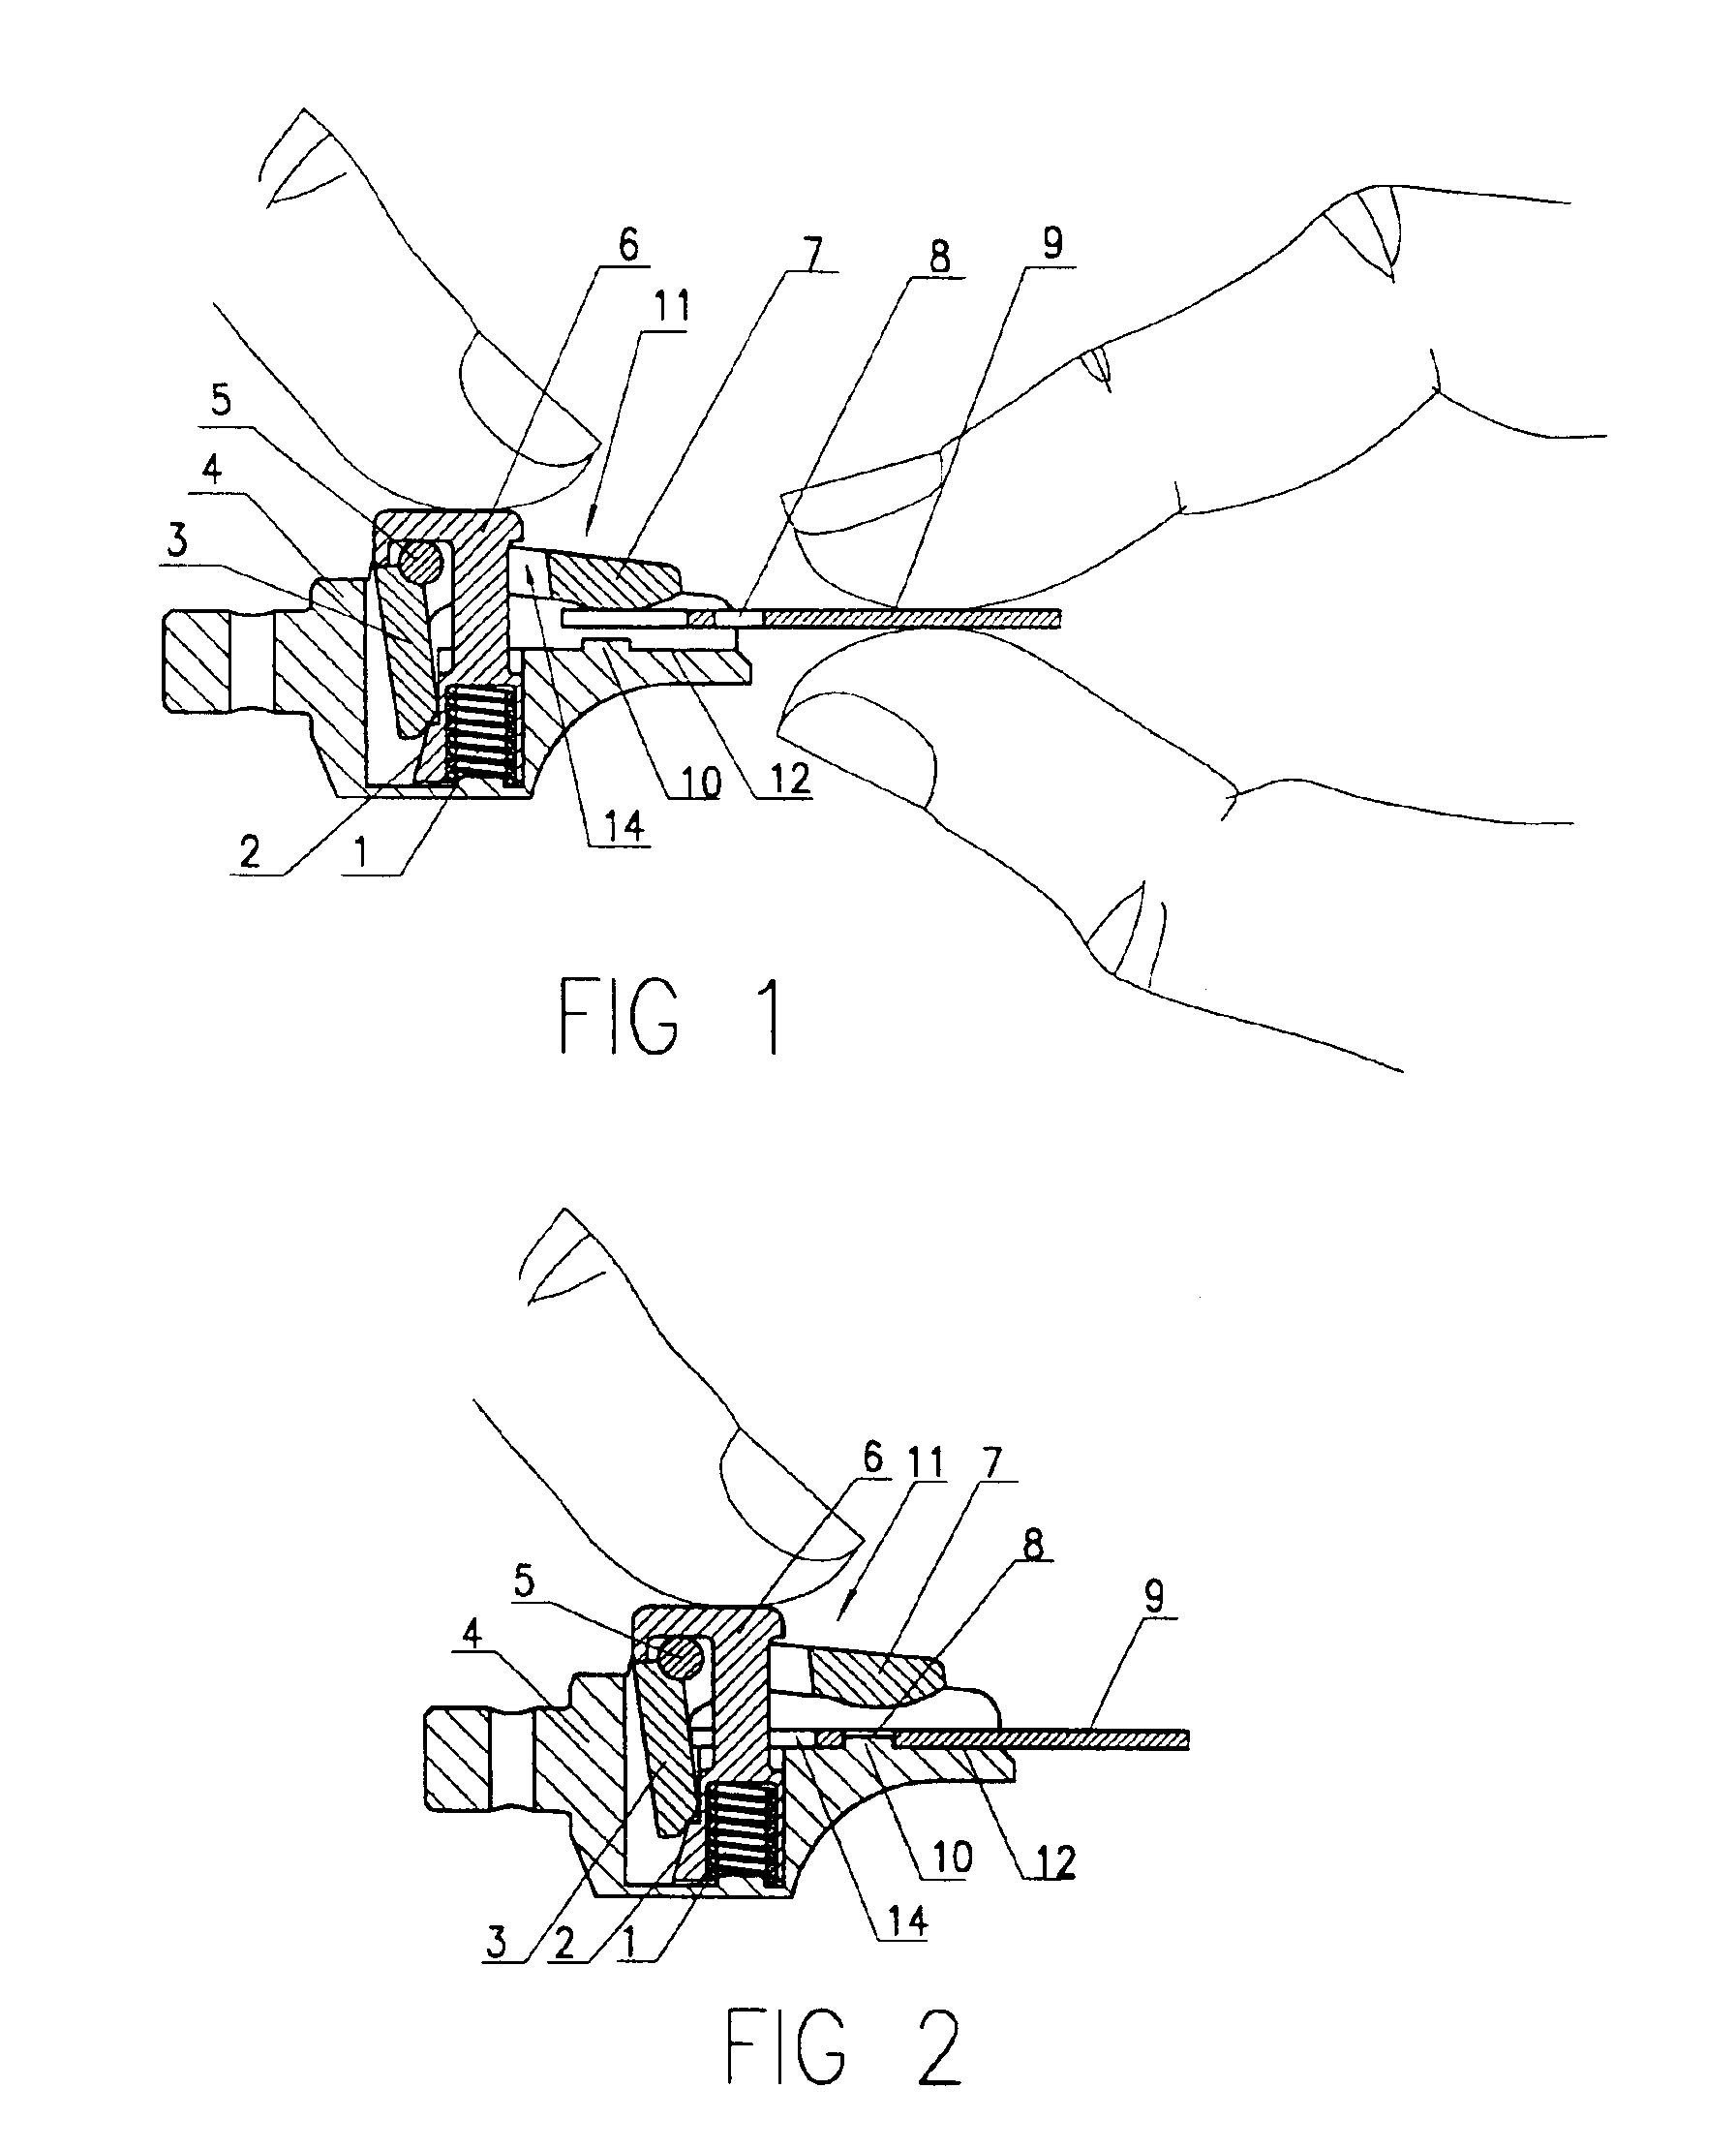 Blade clamp mechanism